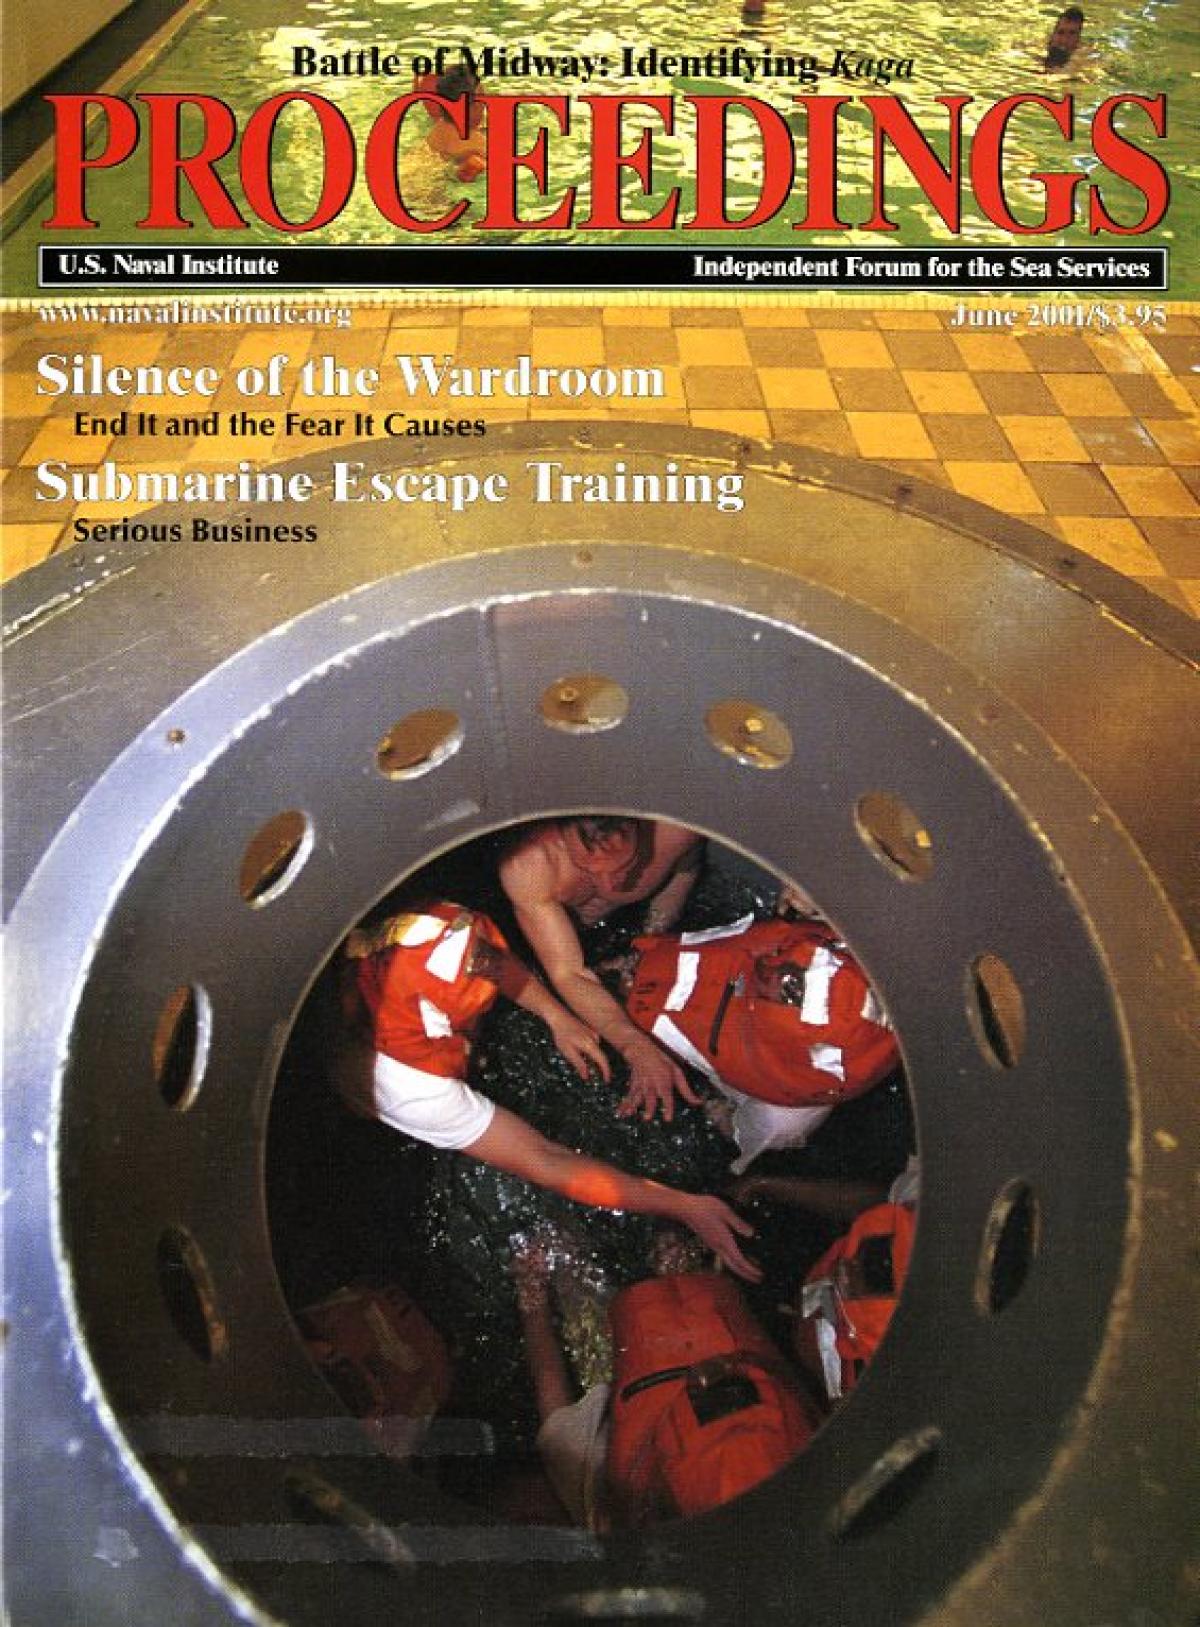 Oswald smuggling Noisy Proceedings - June 2001 Vol. 127/6/1,180 | U.S. Naval Institute